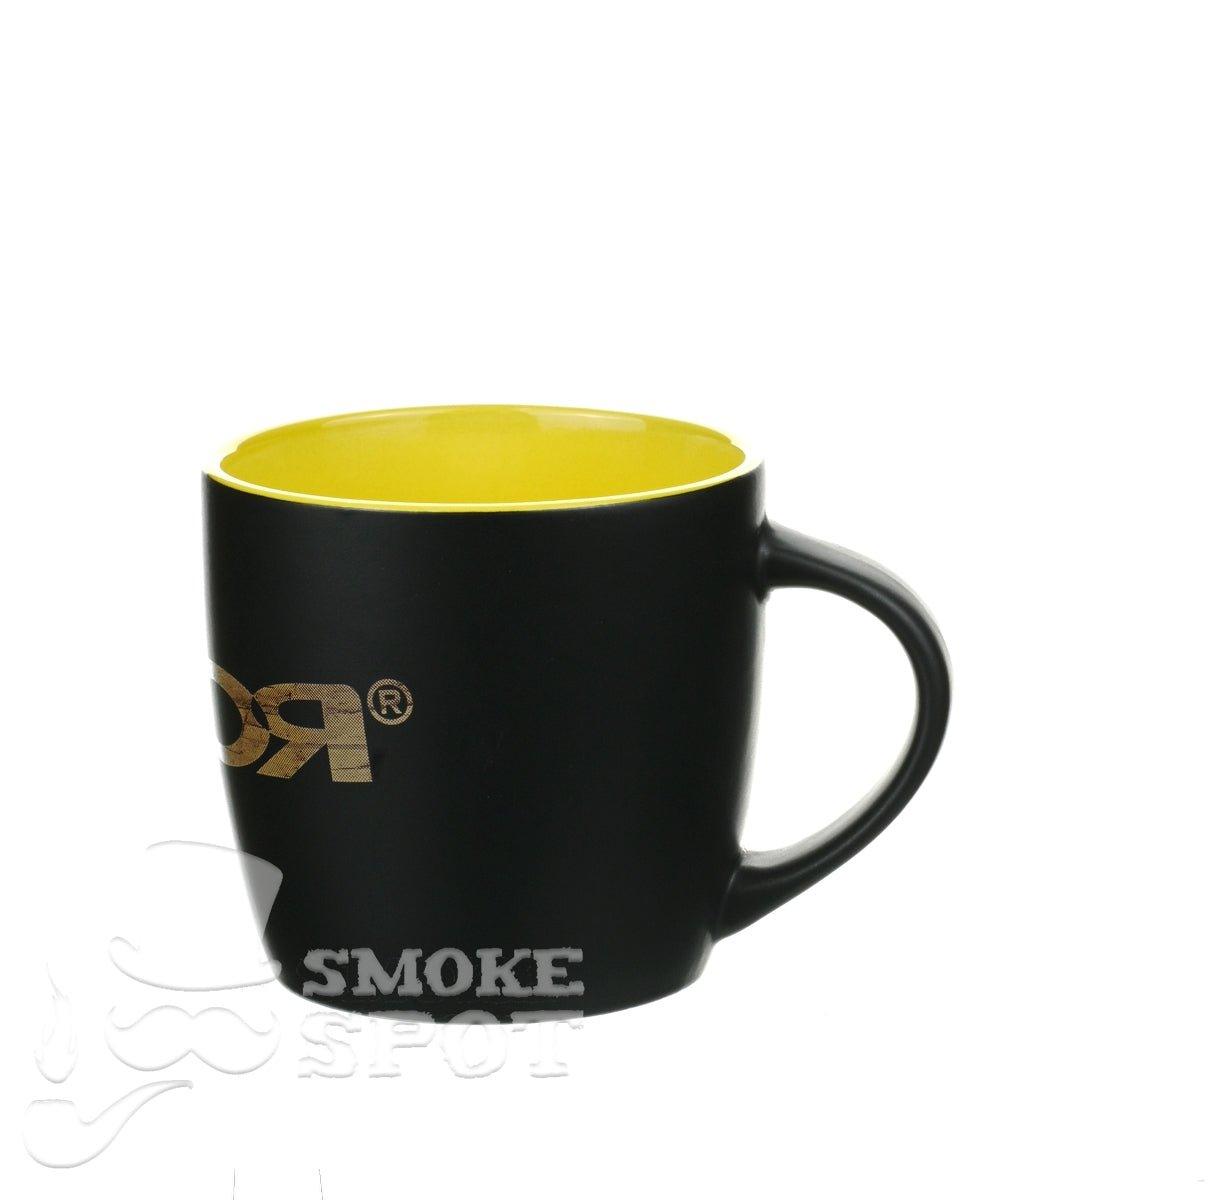 ROOR mug wood grain yellow inside - Smoke Spot Smoke Shop